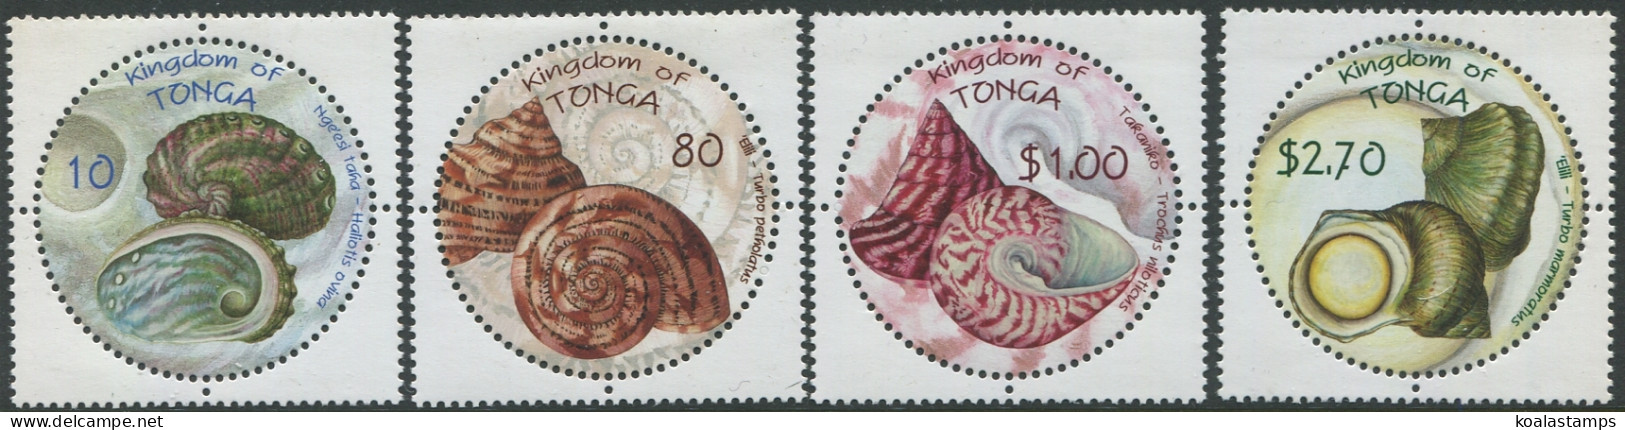 Tonga 2001 SG1507-1510 Tonga Shells Set MNH - Tonga (1970-...)